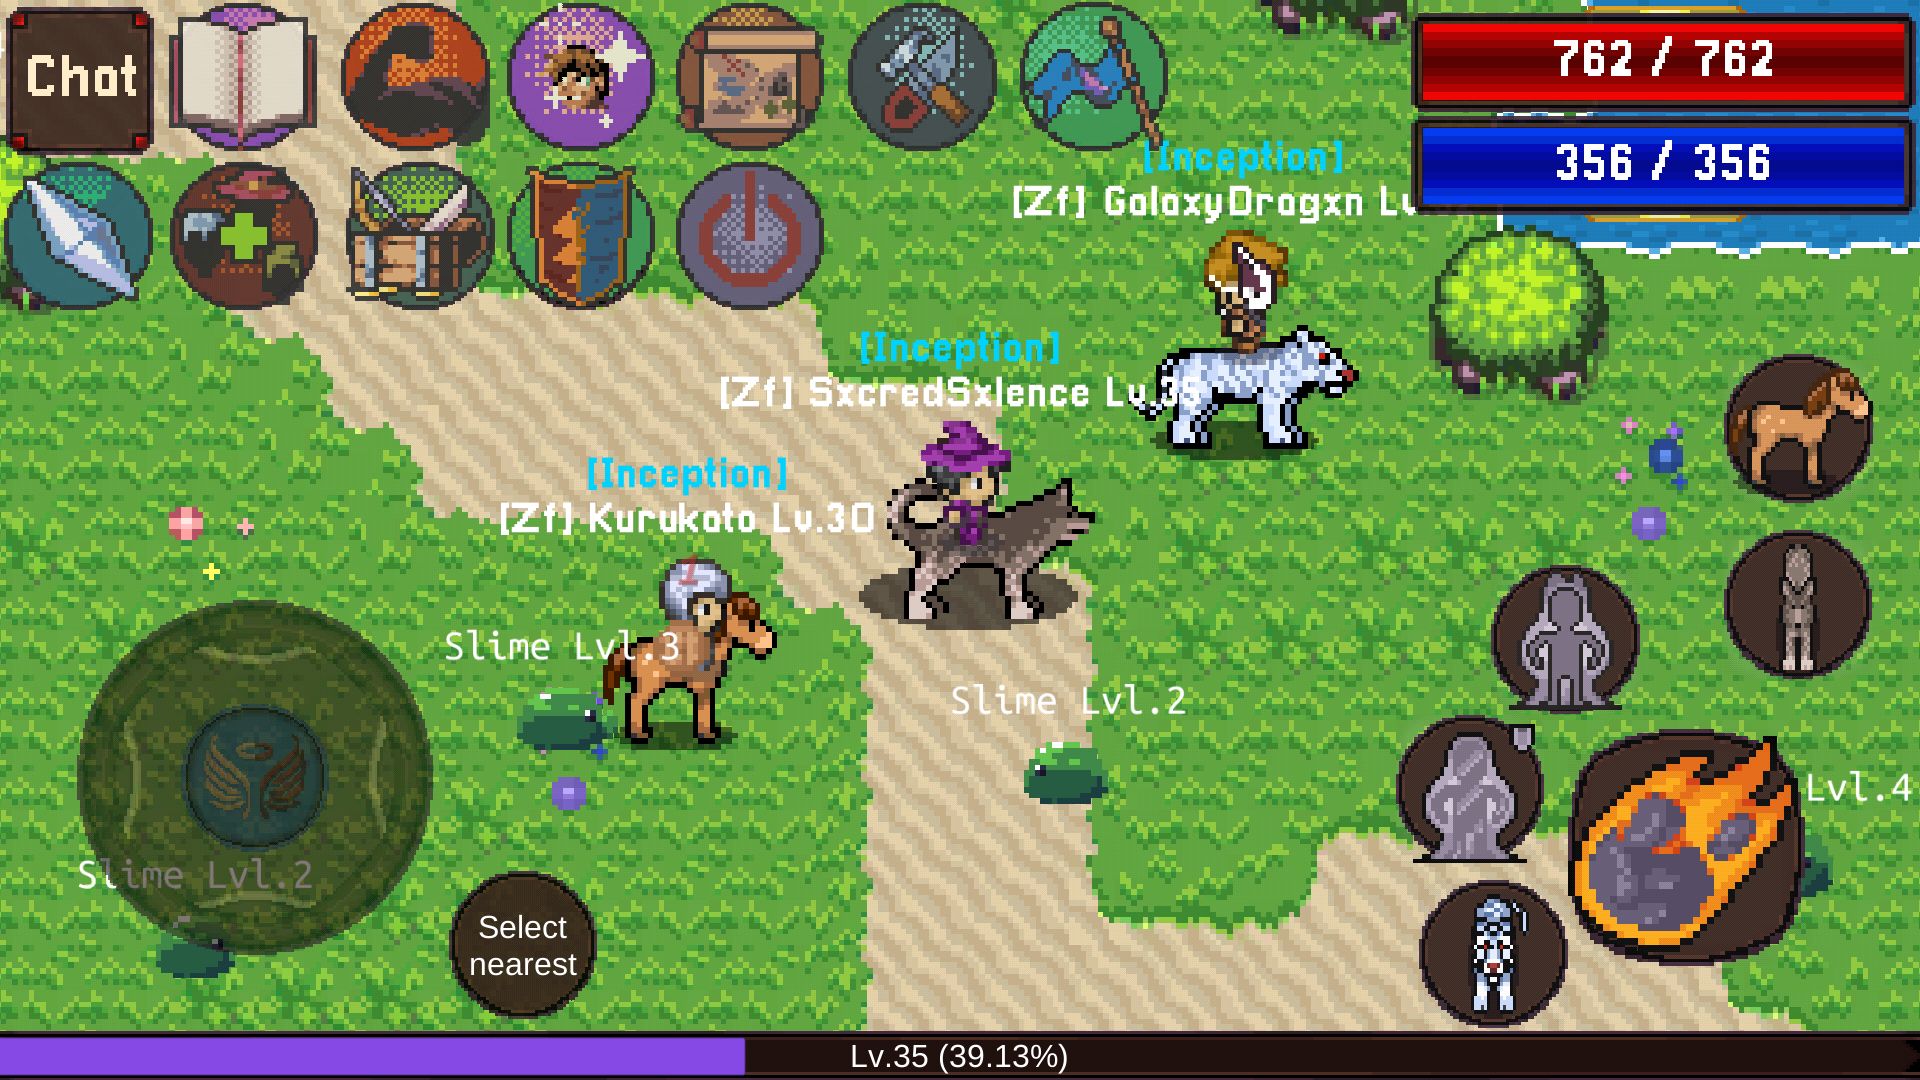 Скачать Elysium Online - MMORPG (Alpha): Android Онлайн РПГ (MMORPG) игра на телефон и планшет.